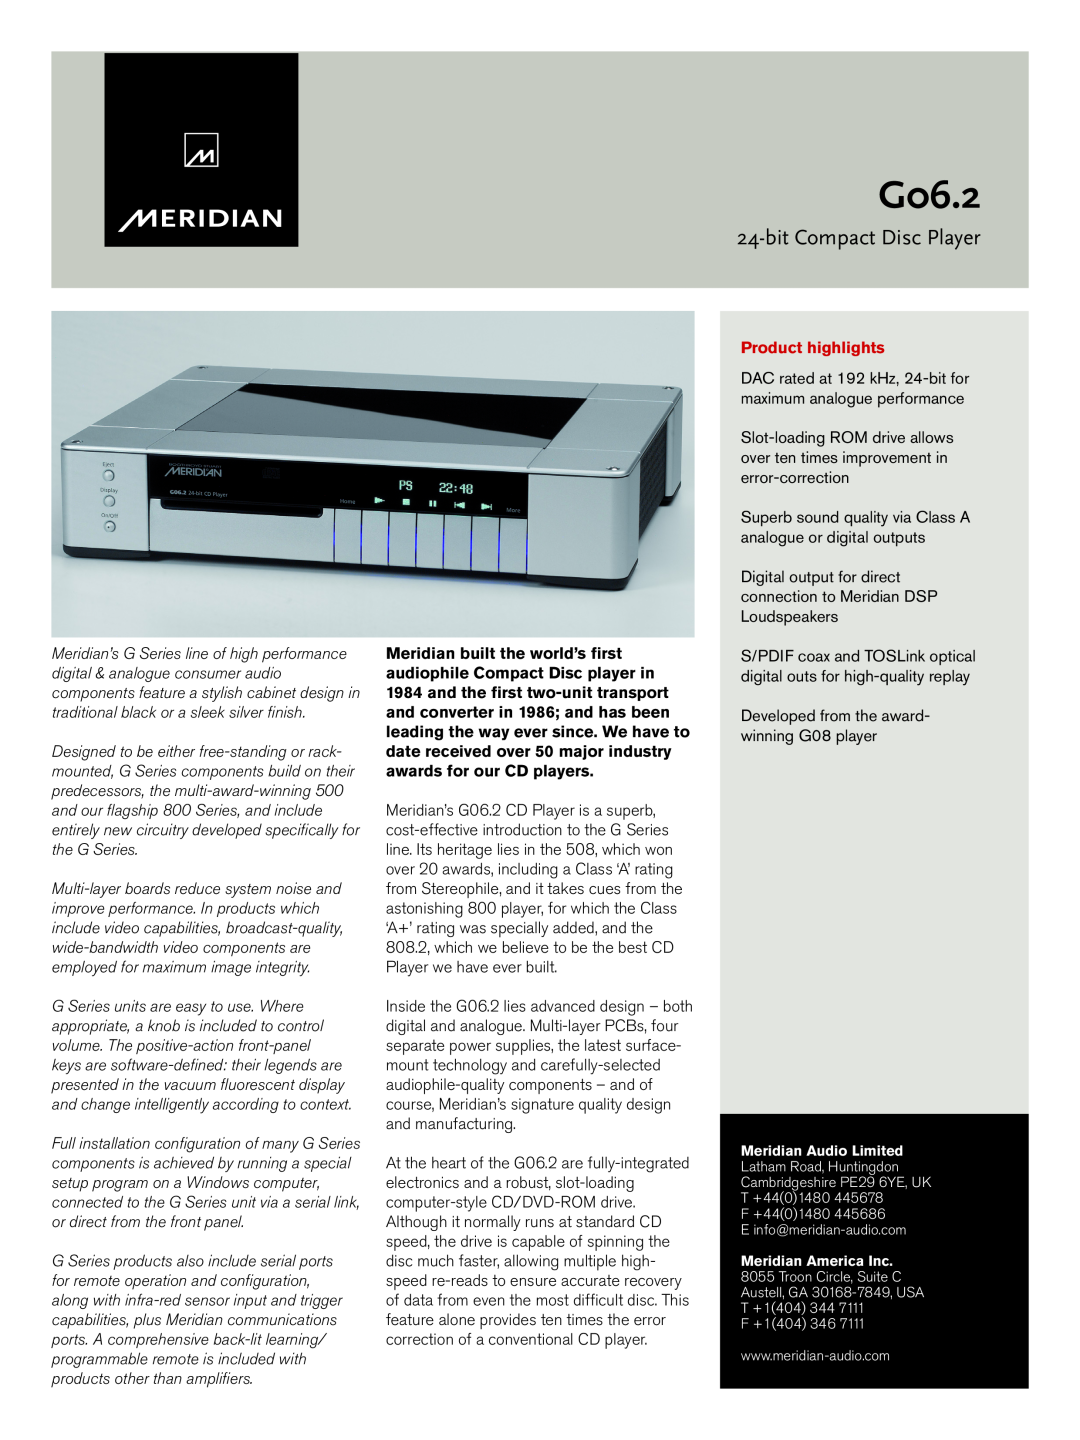 Meridian America G06.2 manual bitCompact Disc Player, Product highlights 